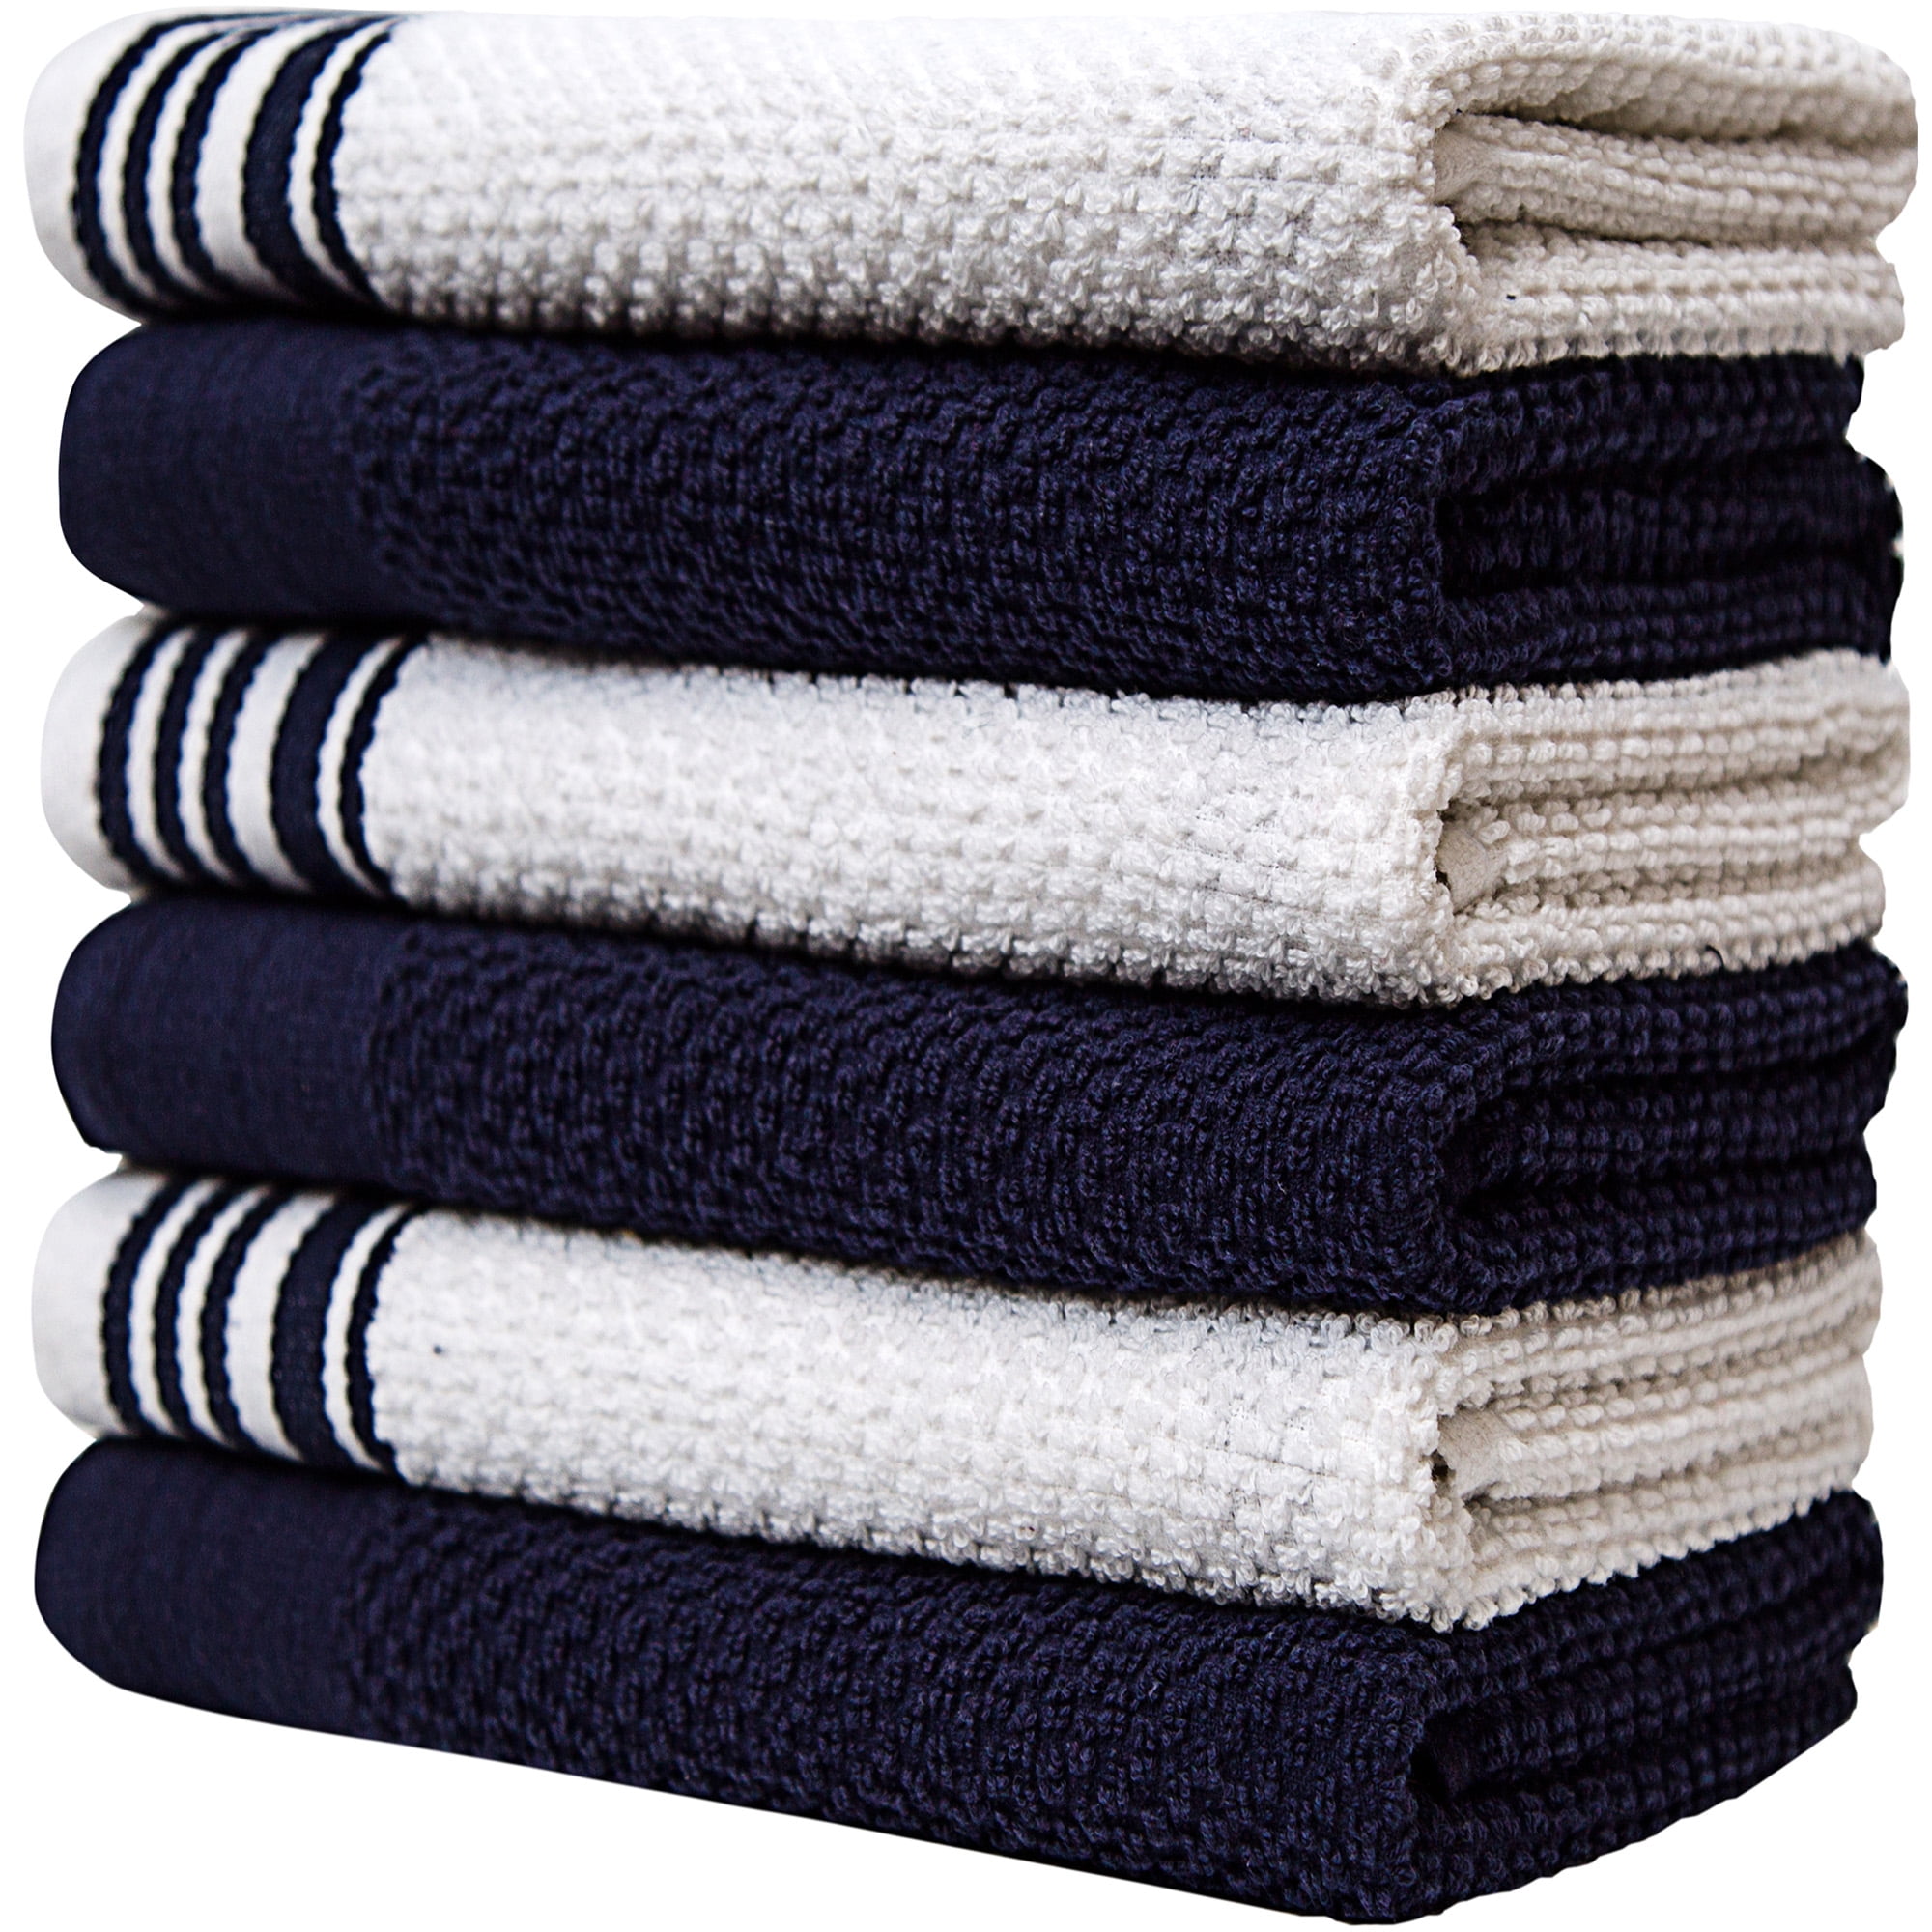 black towel set